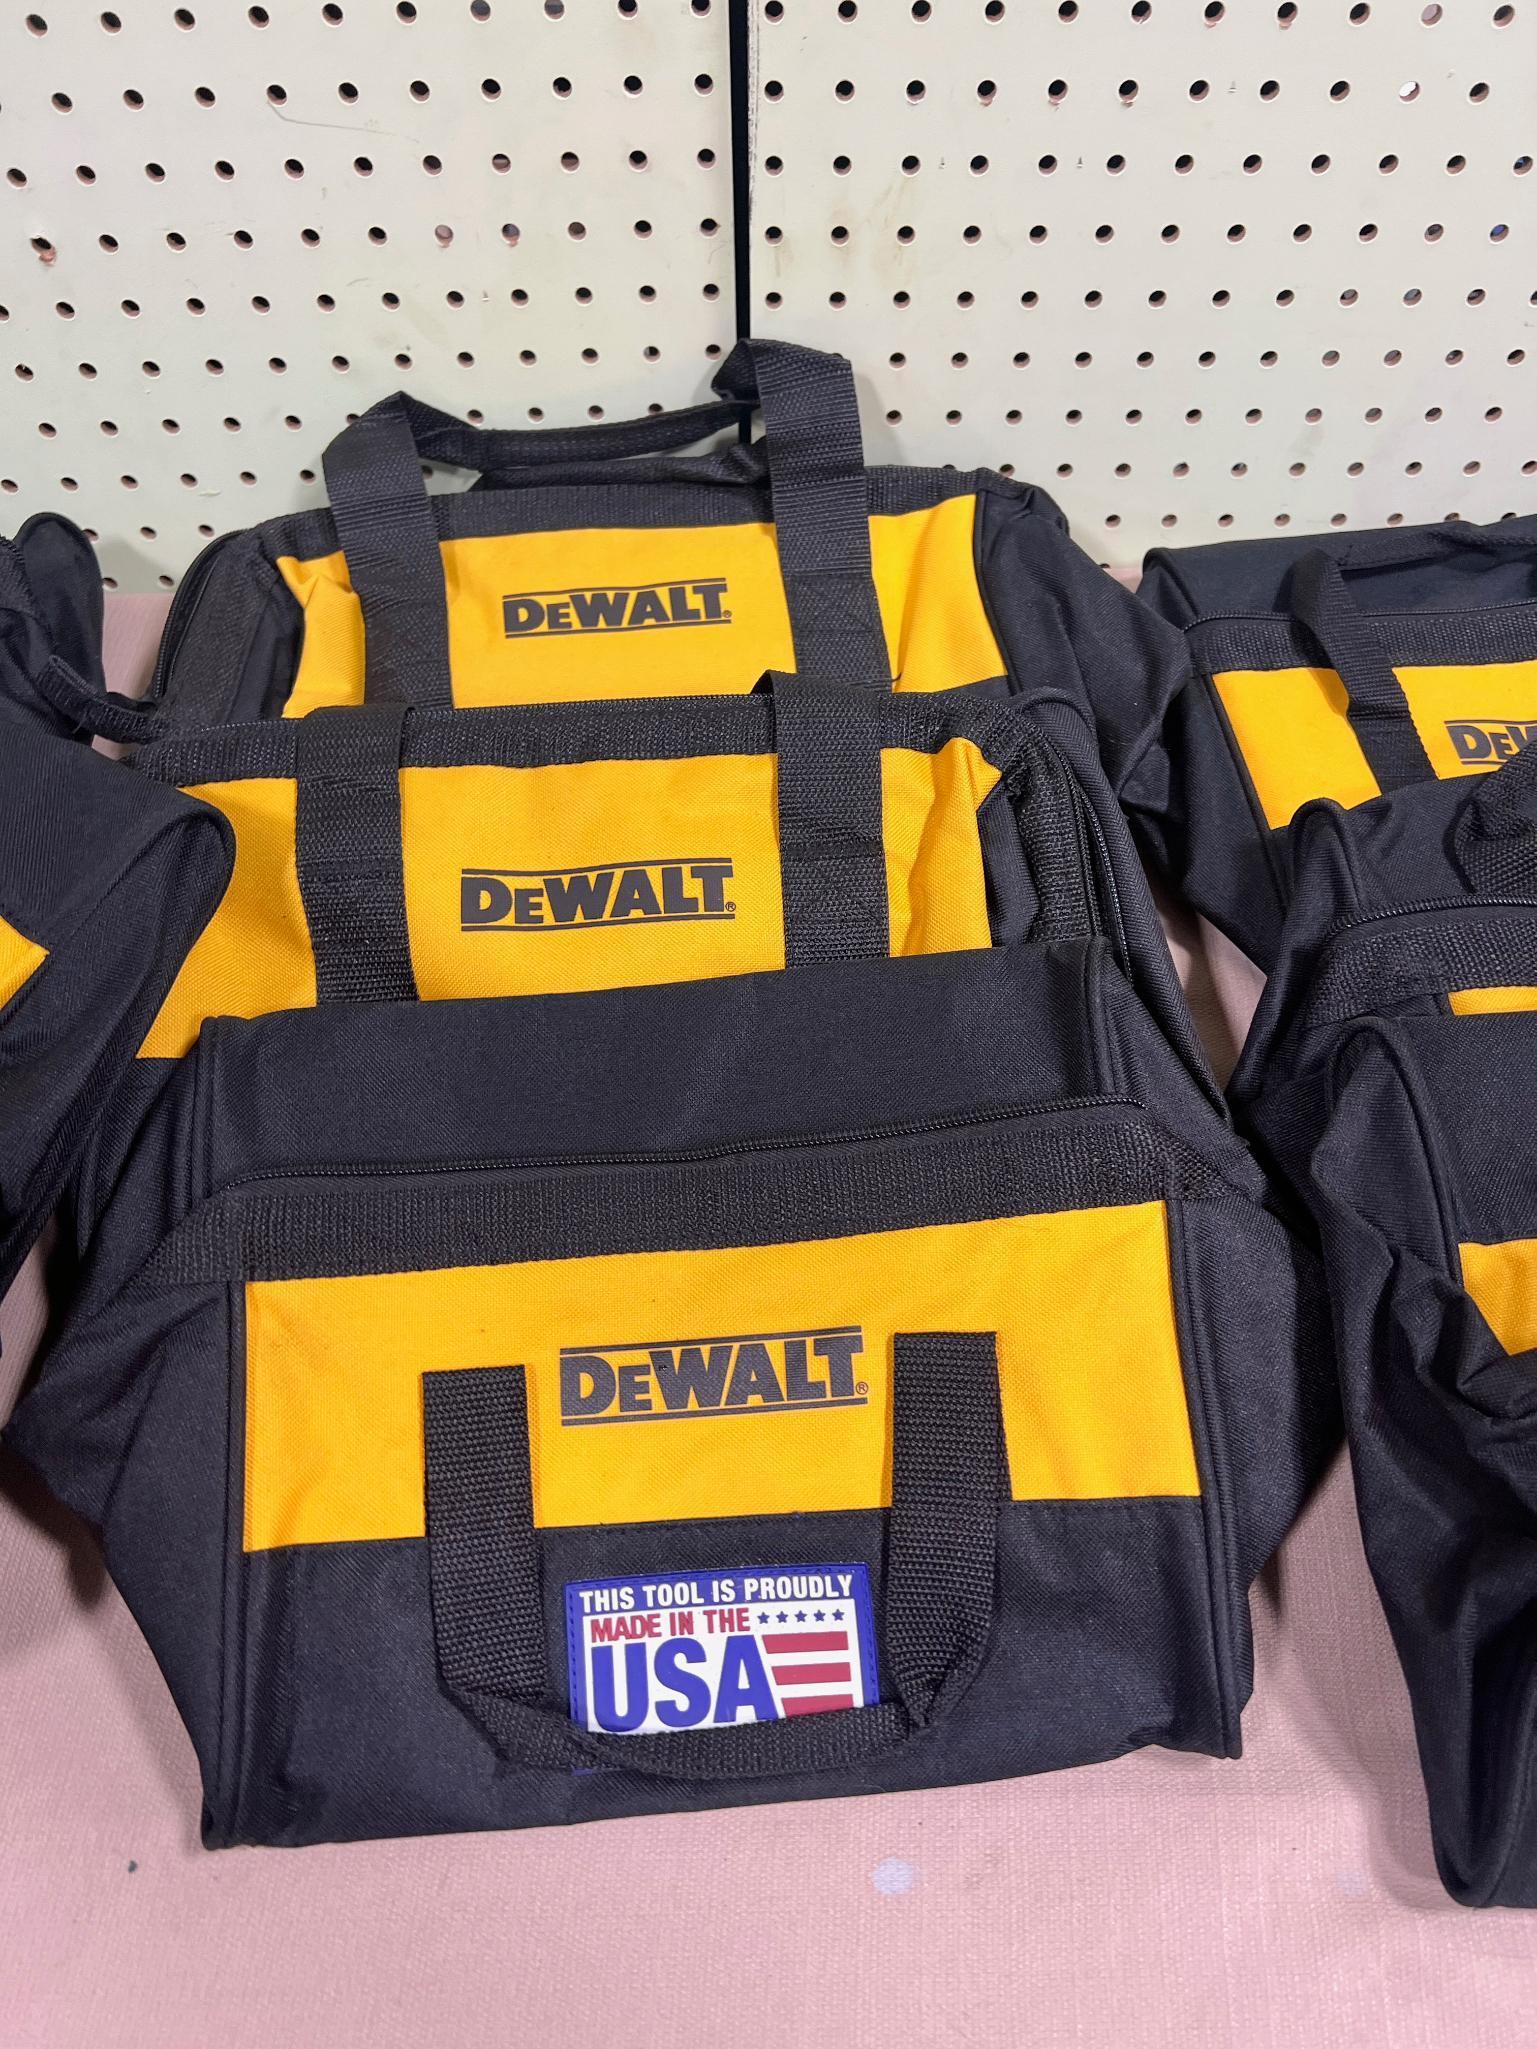 9-Unused Dewalt Tool Bags- SELLS TIMES THE MONEY